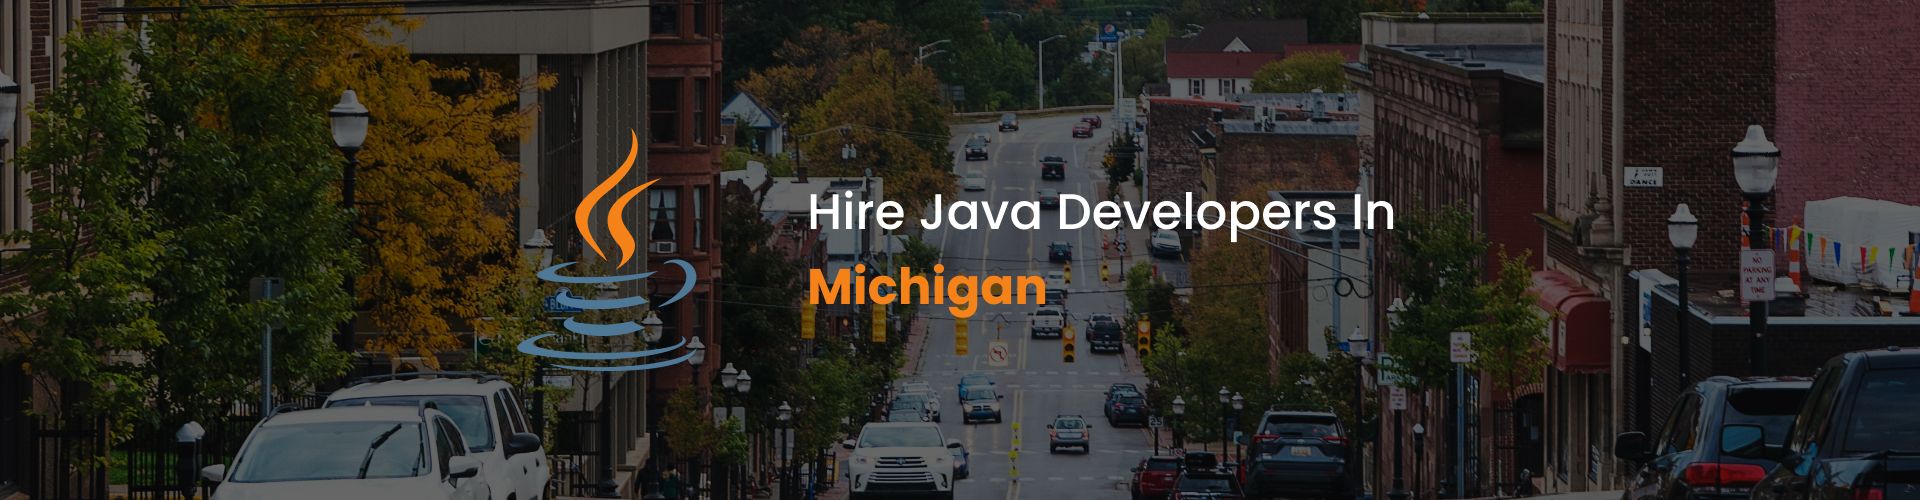 hire java developers in michigan